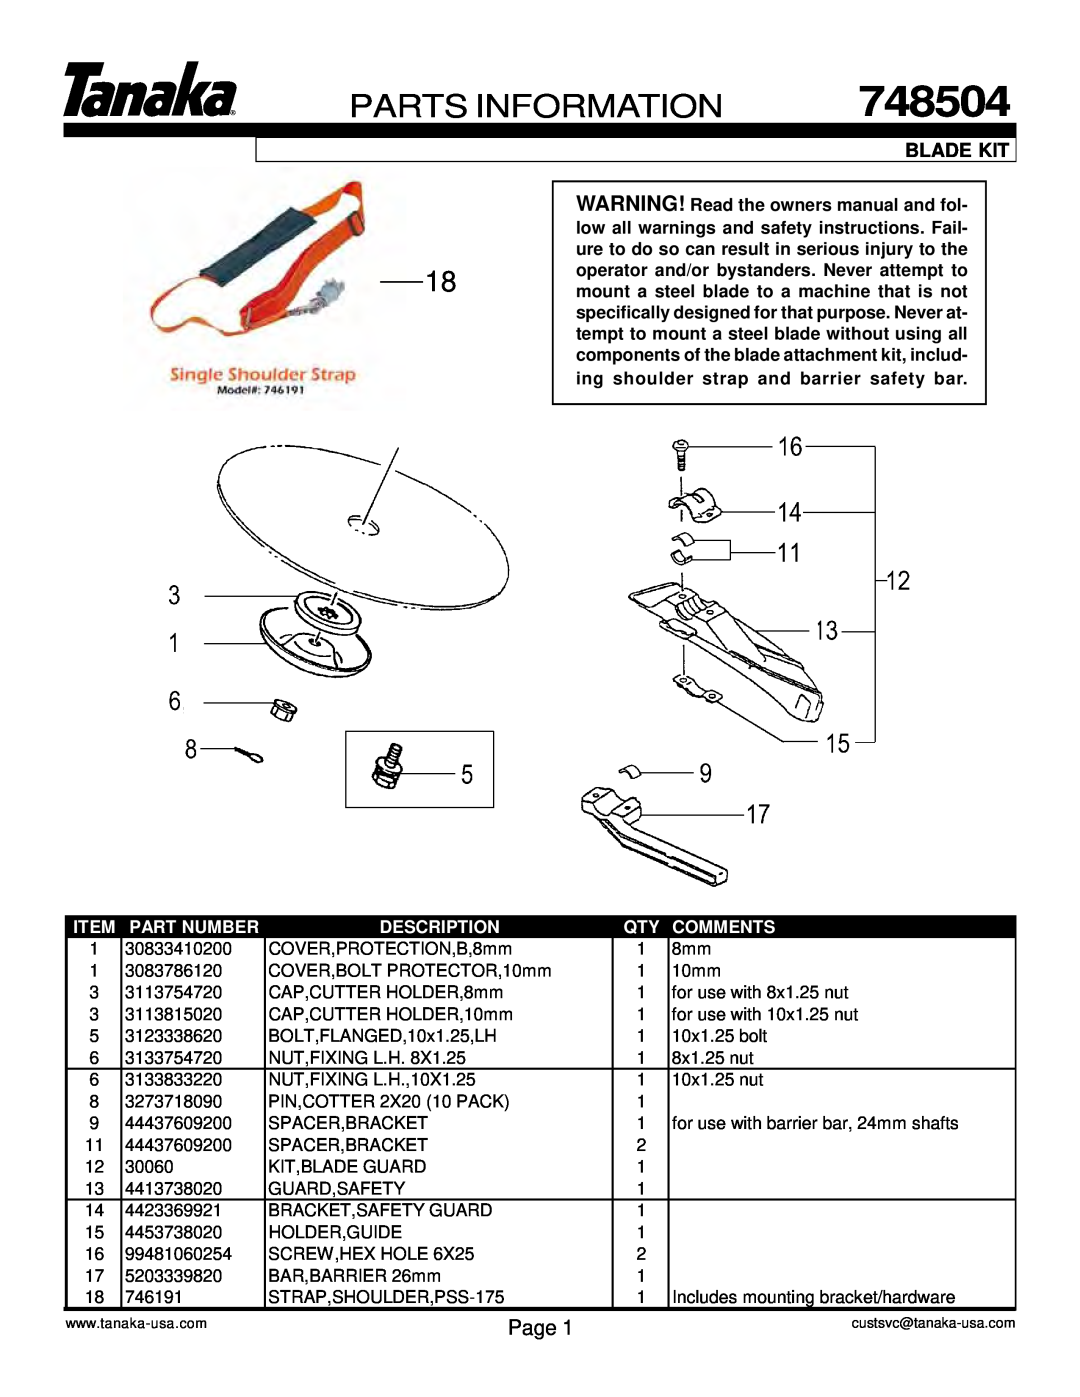 Tanaka TBC-340PF, PFD manual 748504, Parts Information, Blade Kit, Part Number, Description, Comments 